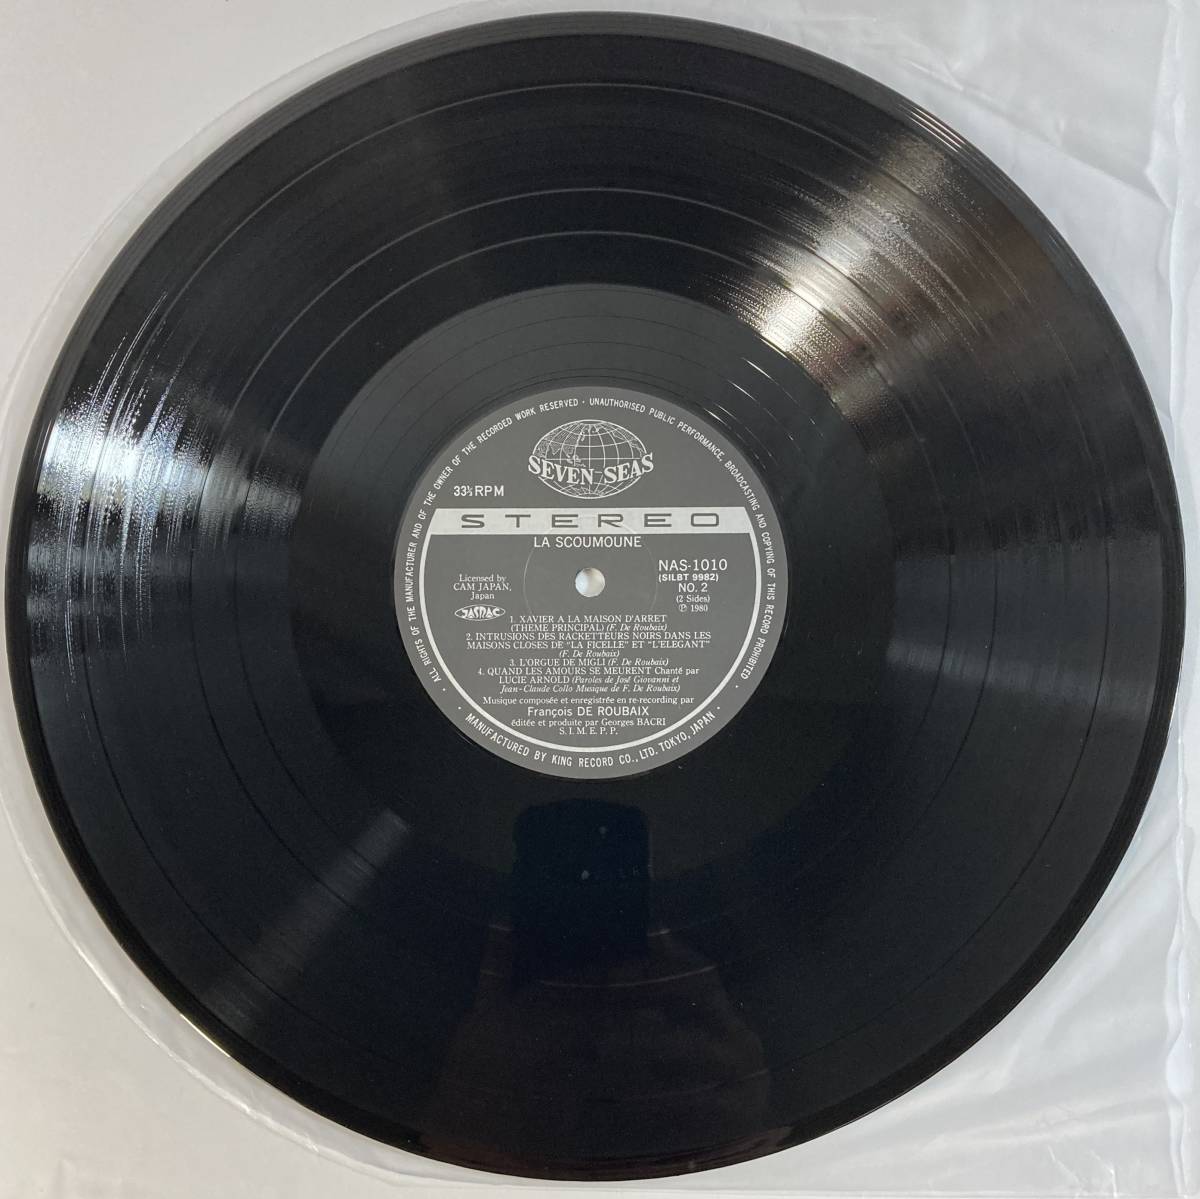 la*sk moon (1972) franc sowa*do* Roo be domestic record LP KI NAS 1010 see opening 